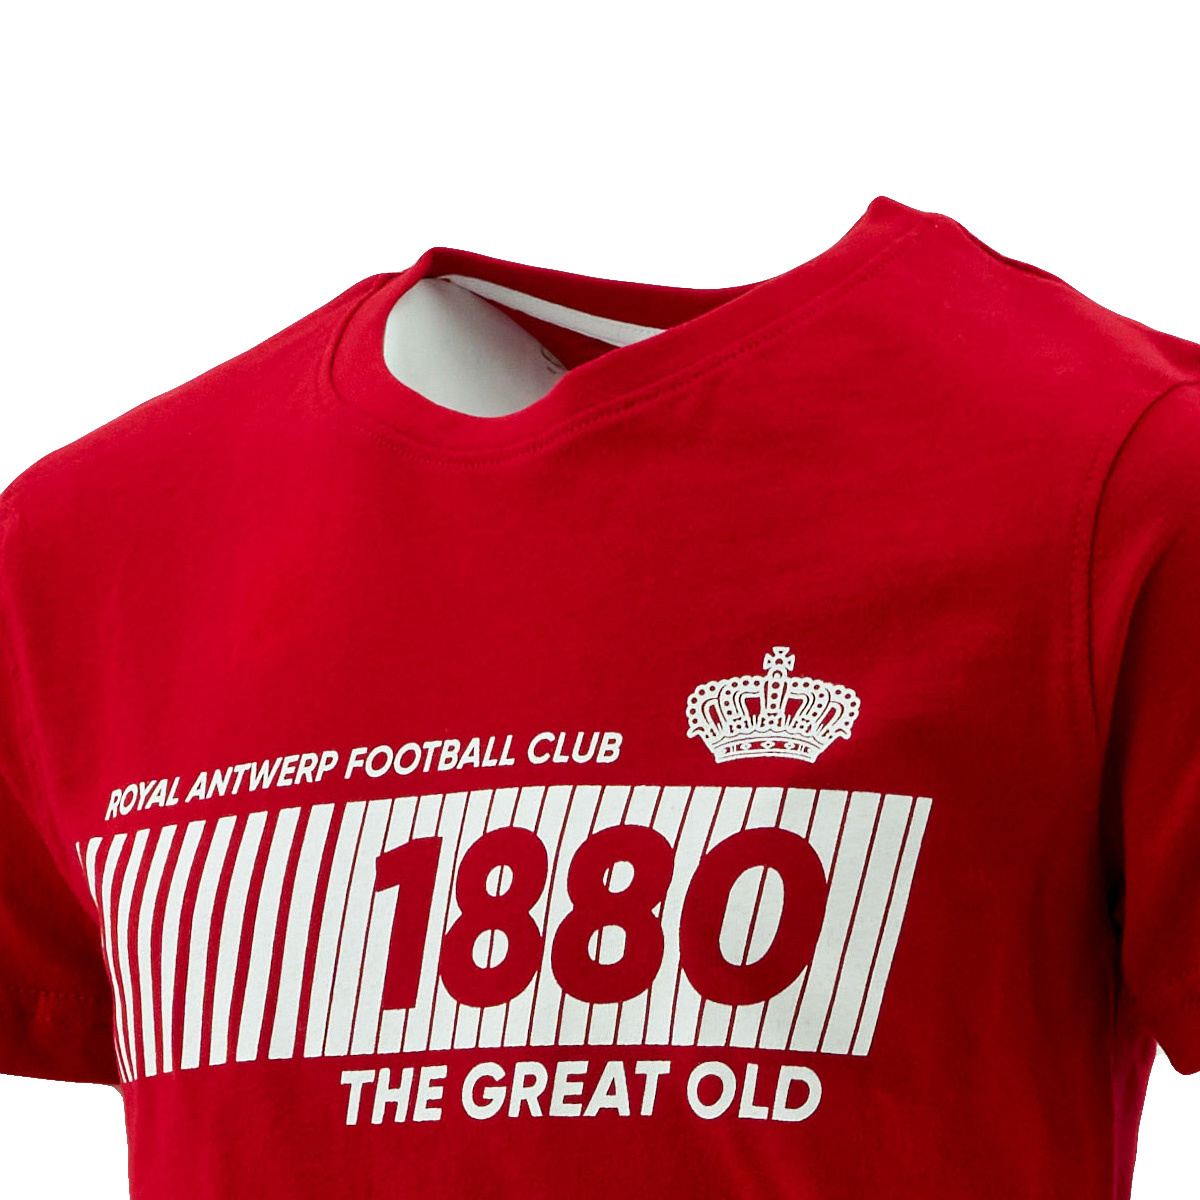 T-shirt kids rood 1880 The Great Old met strepen en kroontje-5